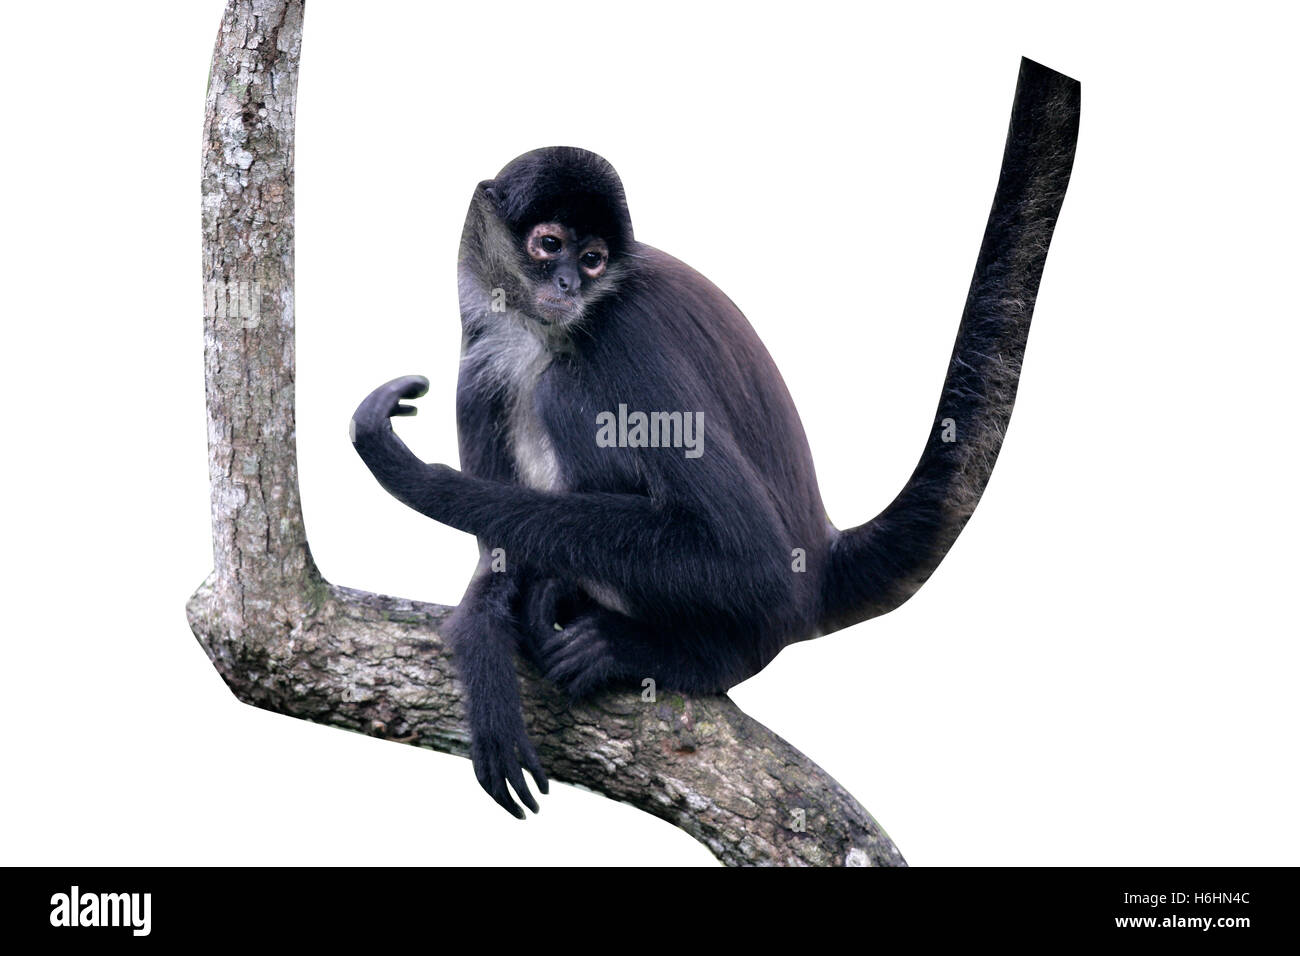 Central American Spider Monkey or Geoffroys spider monkey, Ateles geoffroyi, single mammal on branch Stock Photo